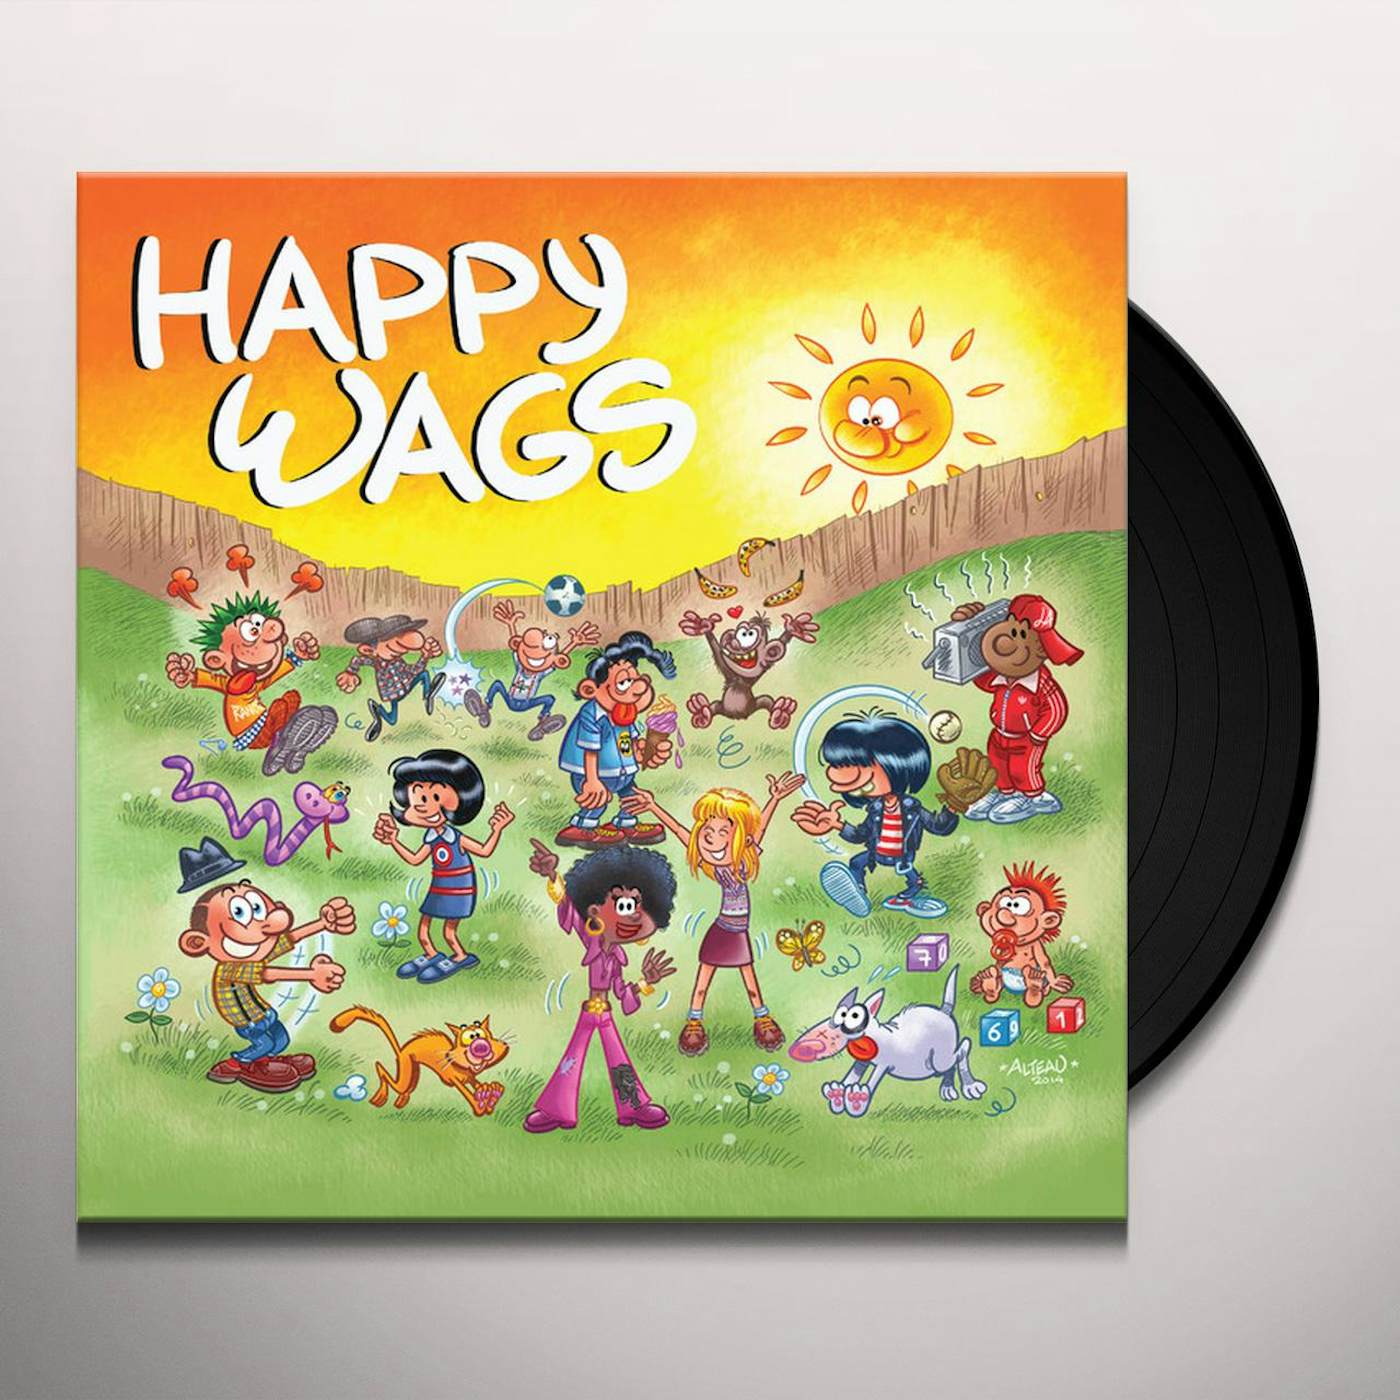 Happy Wags Vinyl Record